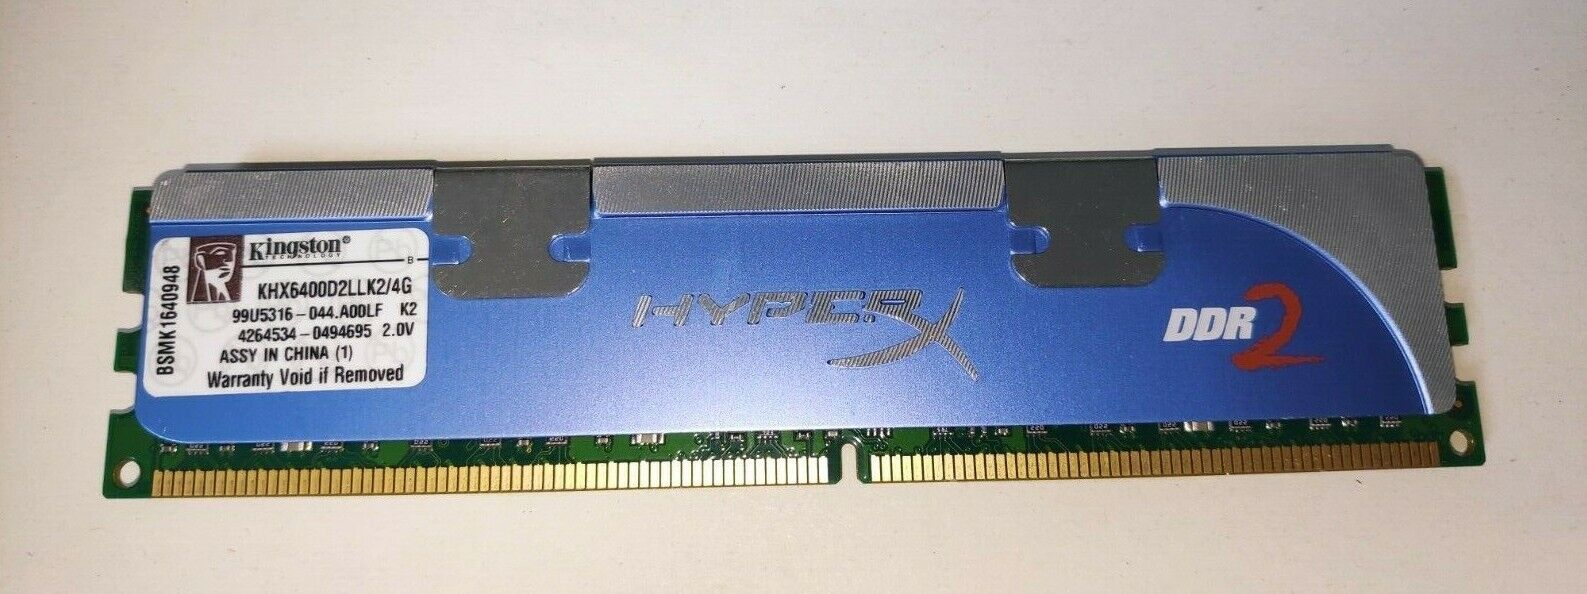 Kingston HyperX KHX6400D2LLK2/4G 1x 2GB PC2 6400 DDR2 800MHz DIMM PC Memory RAM